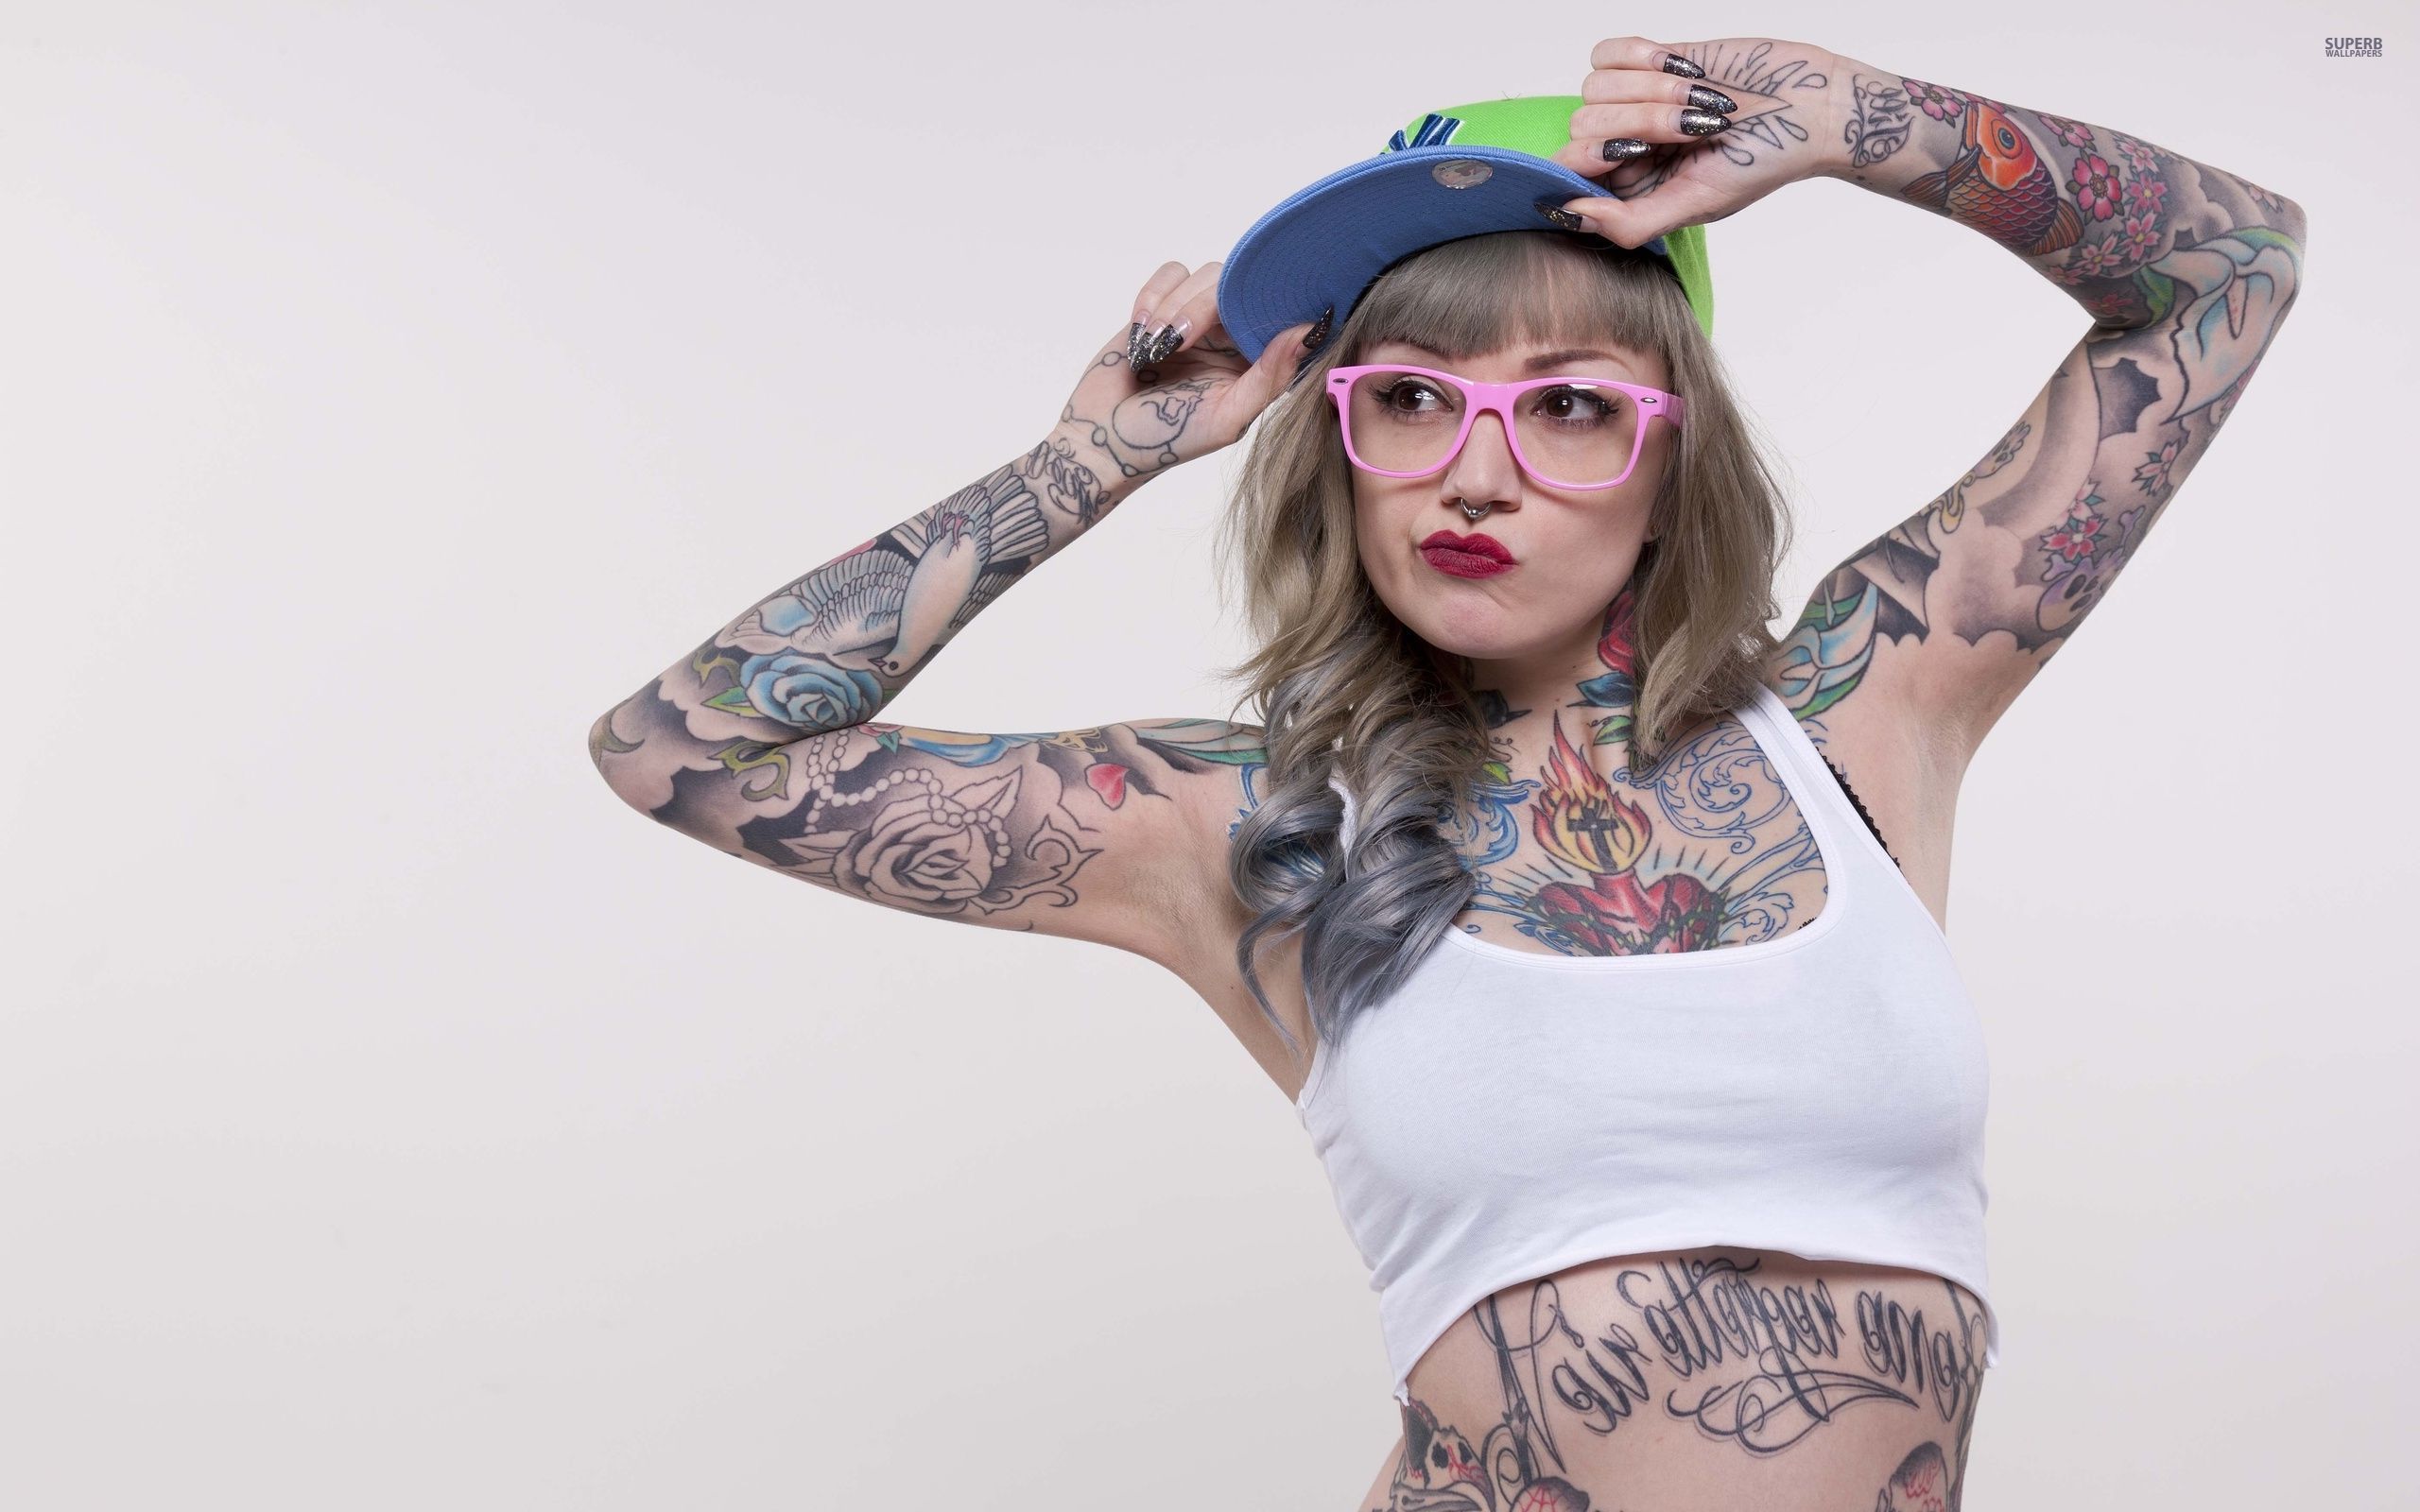 tattooed women : Desktop and mobile wallpapers : Wallippo